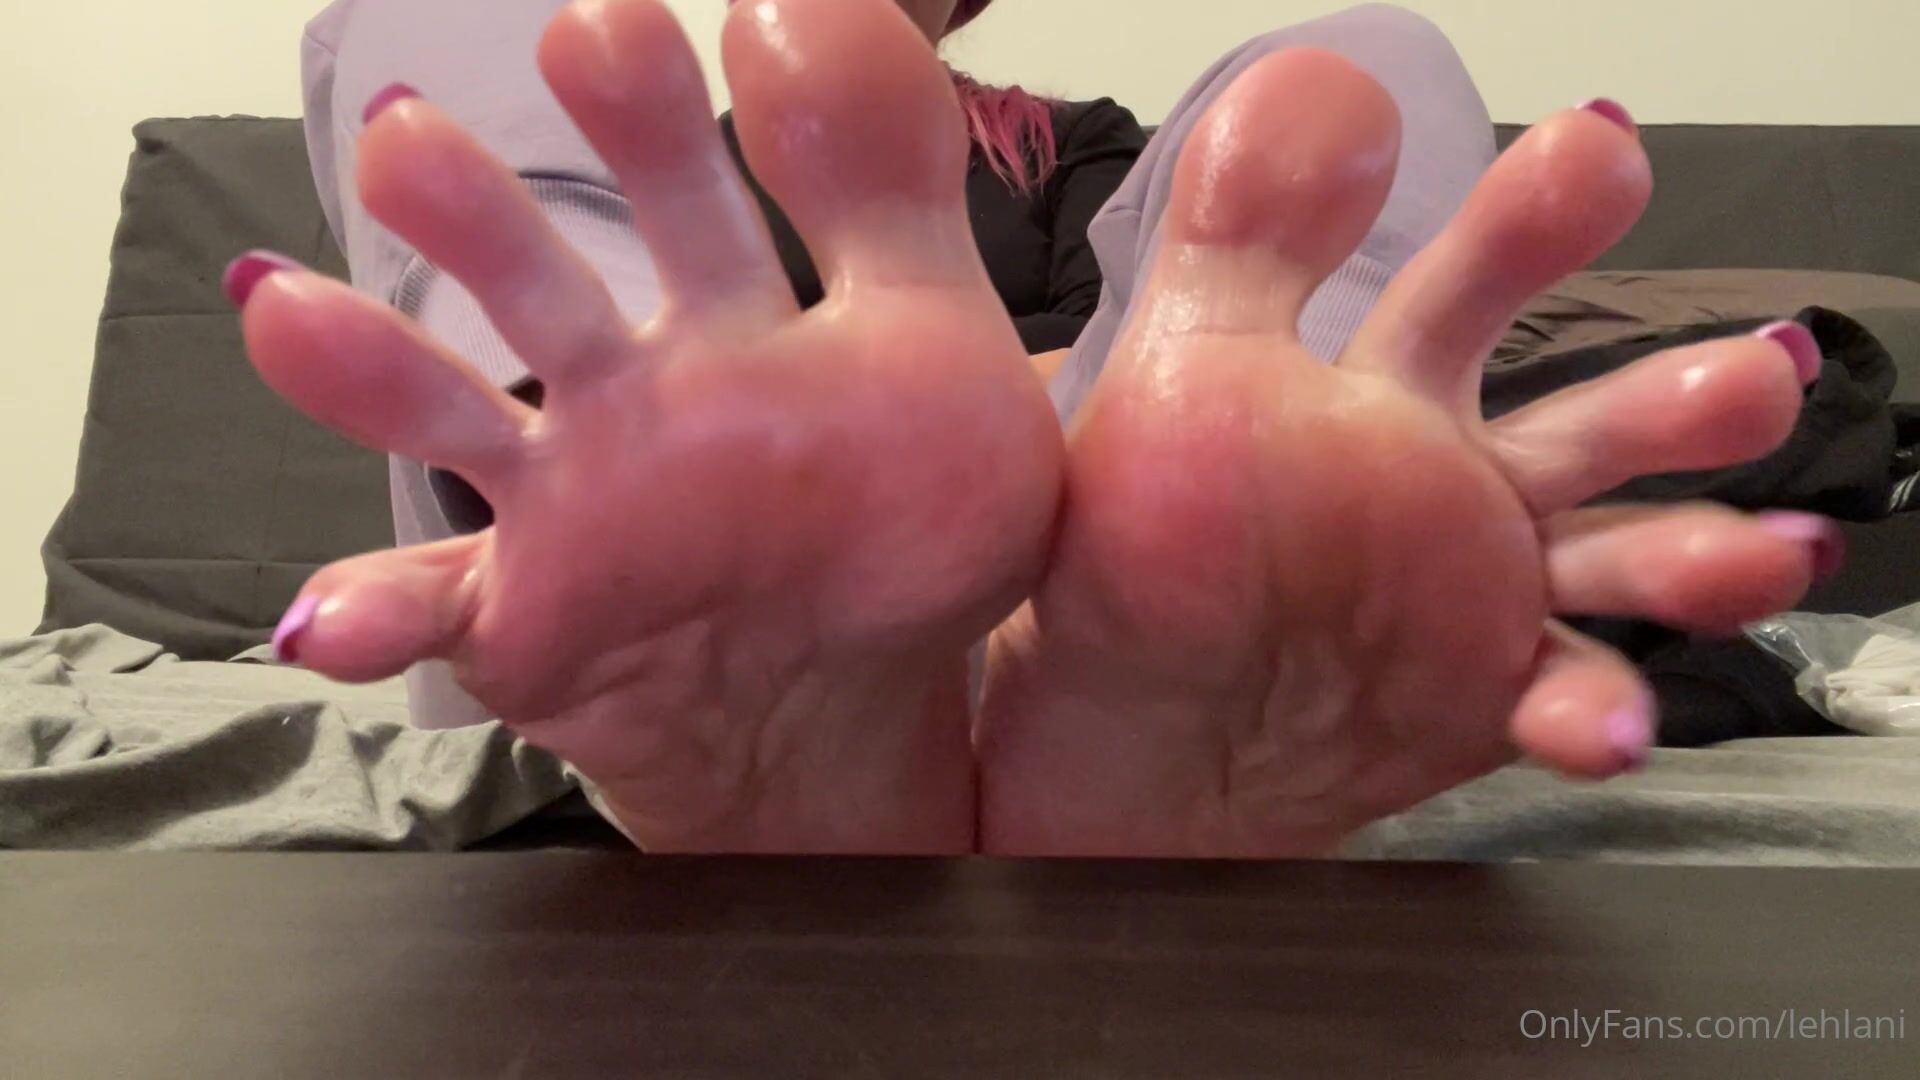 Lehlani has pretty pink toes